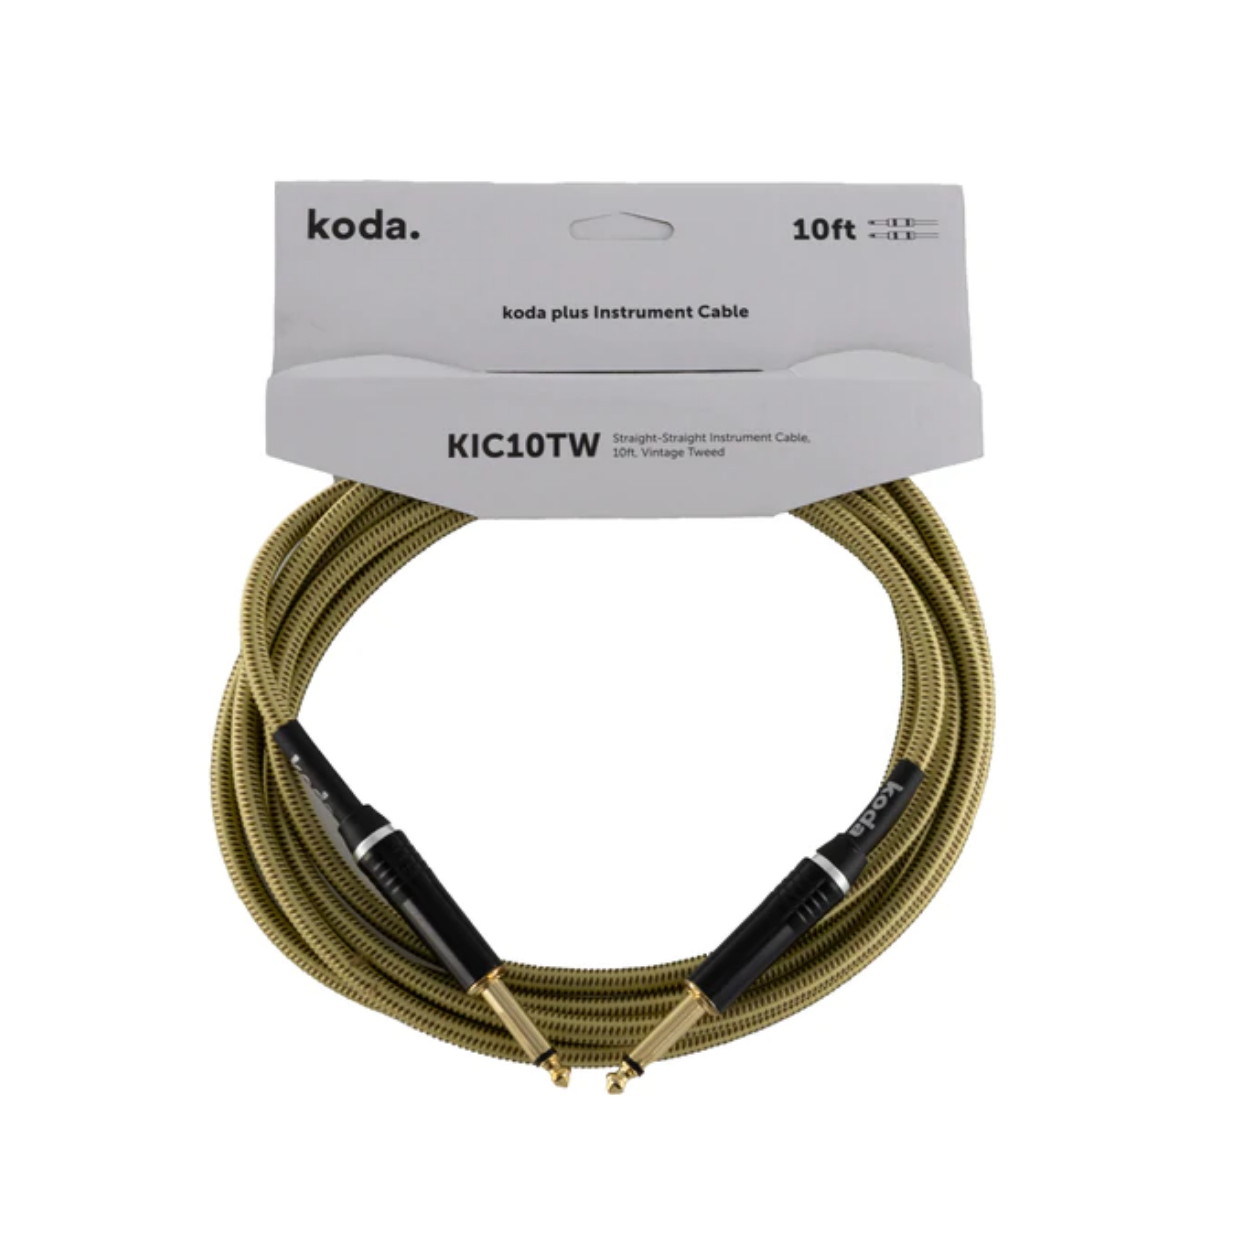 koda plus KIC10TW Straight-Straight Instrument Cable, 10ft, Vintage Tweed